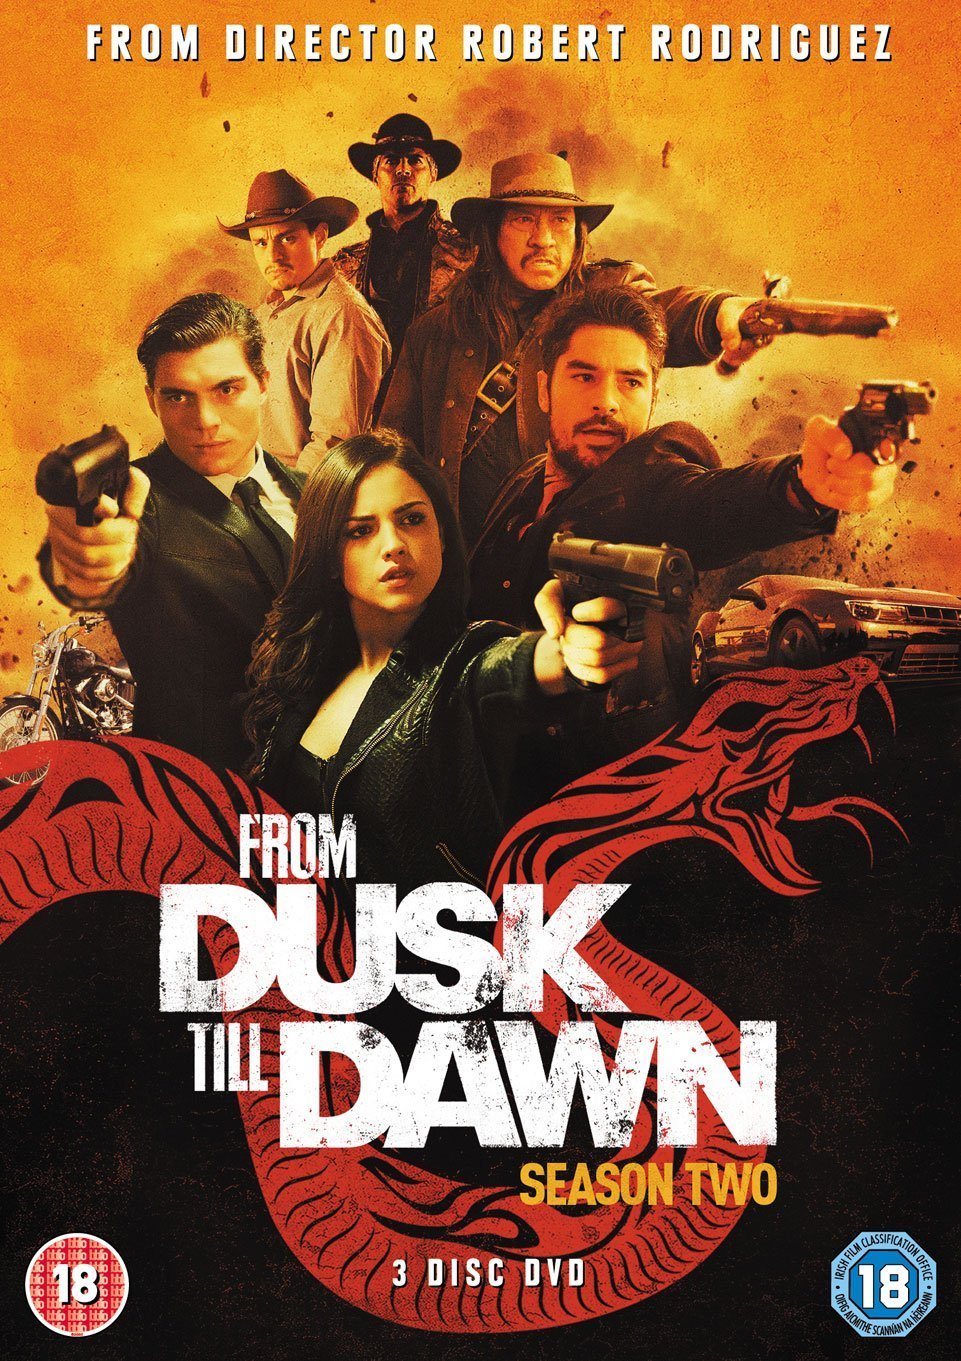 From Dusk Till Dawn Season 2 DVD review